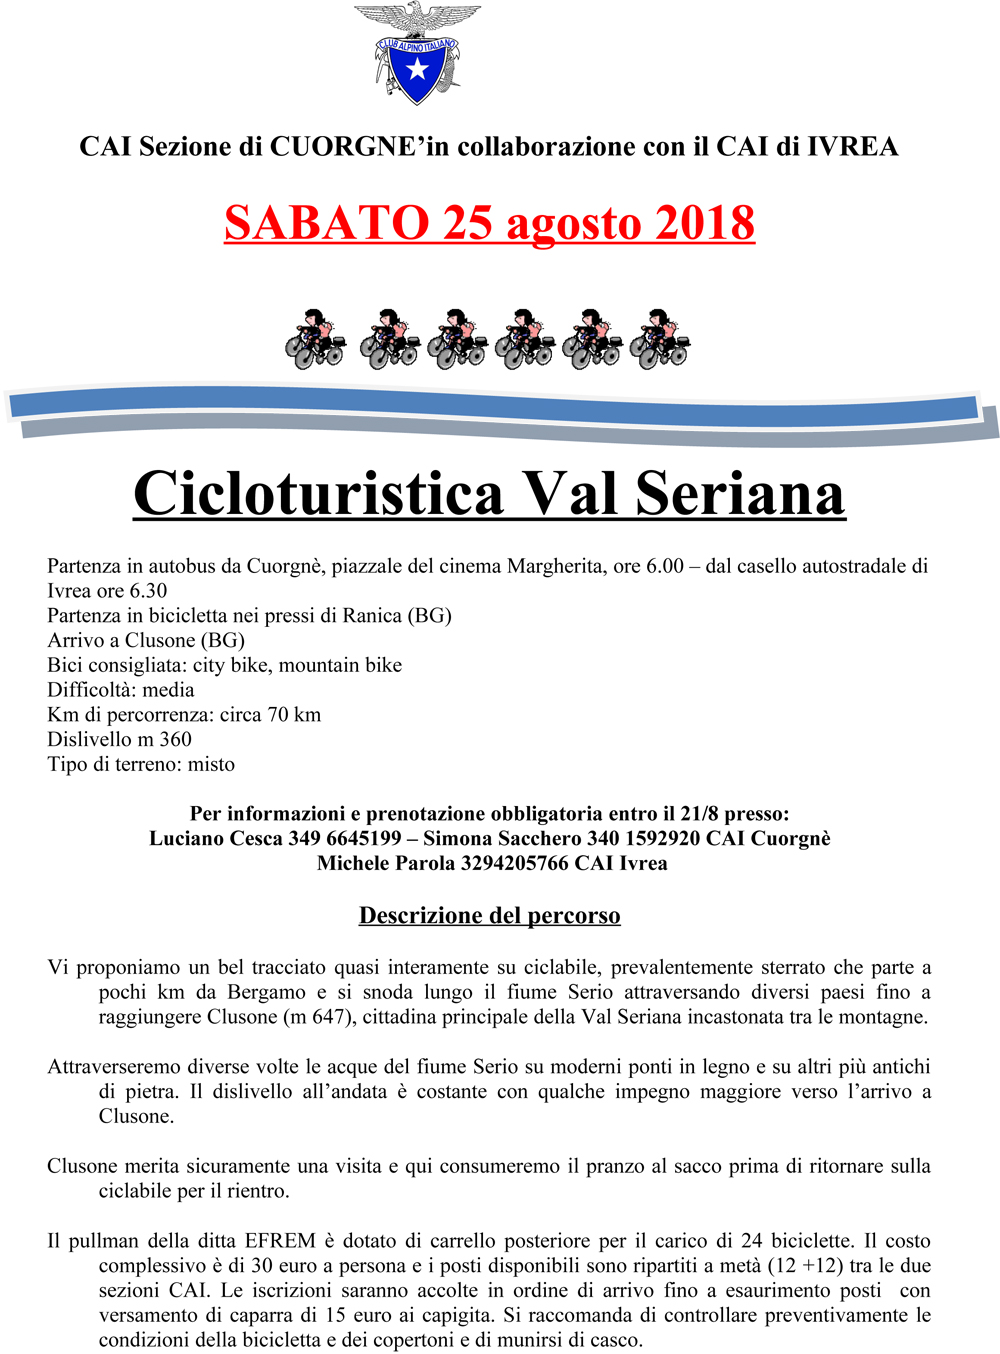 Volantino Cicloturistica Val Seriana.jpg